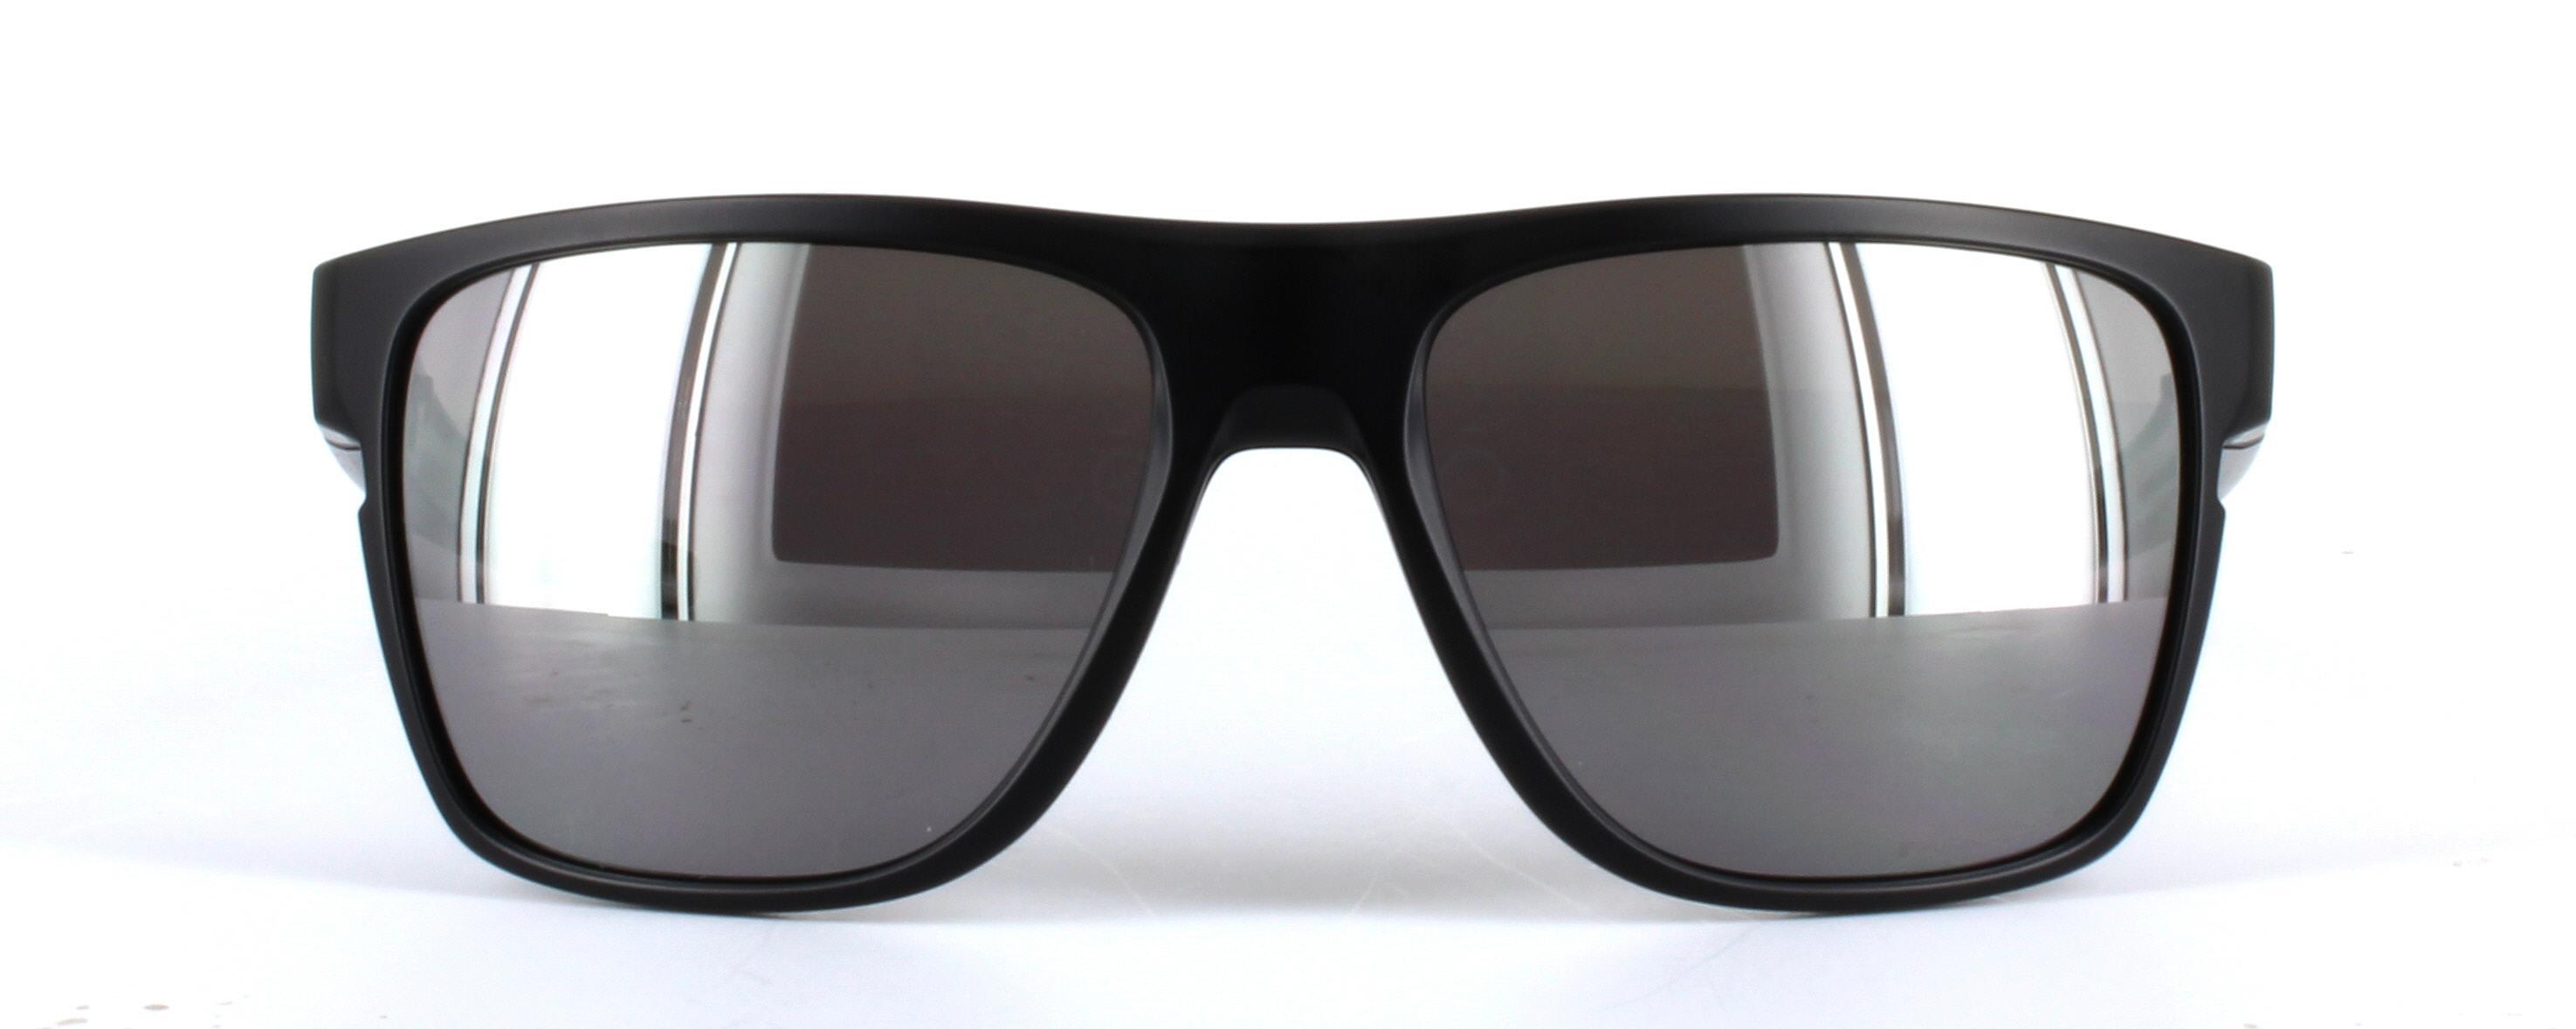 Oakley (O9360) Black Full Rim Plastic Sunglasses - Image View 5